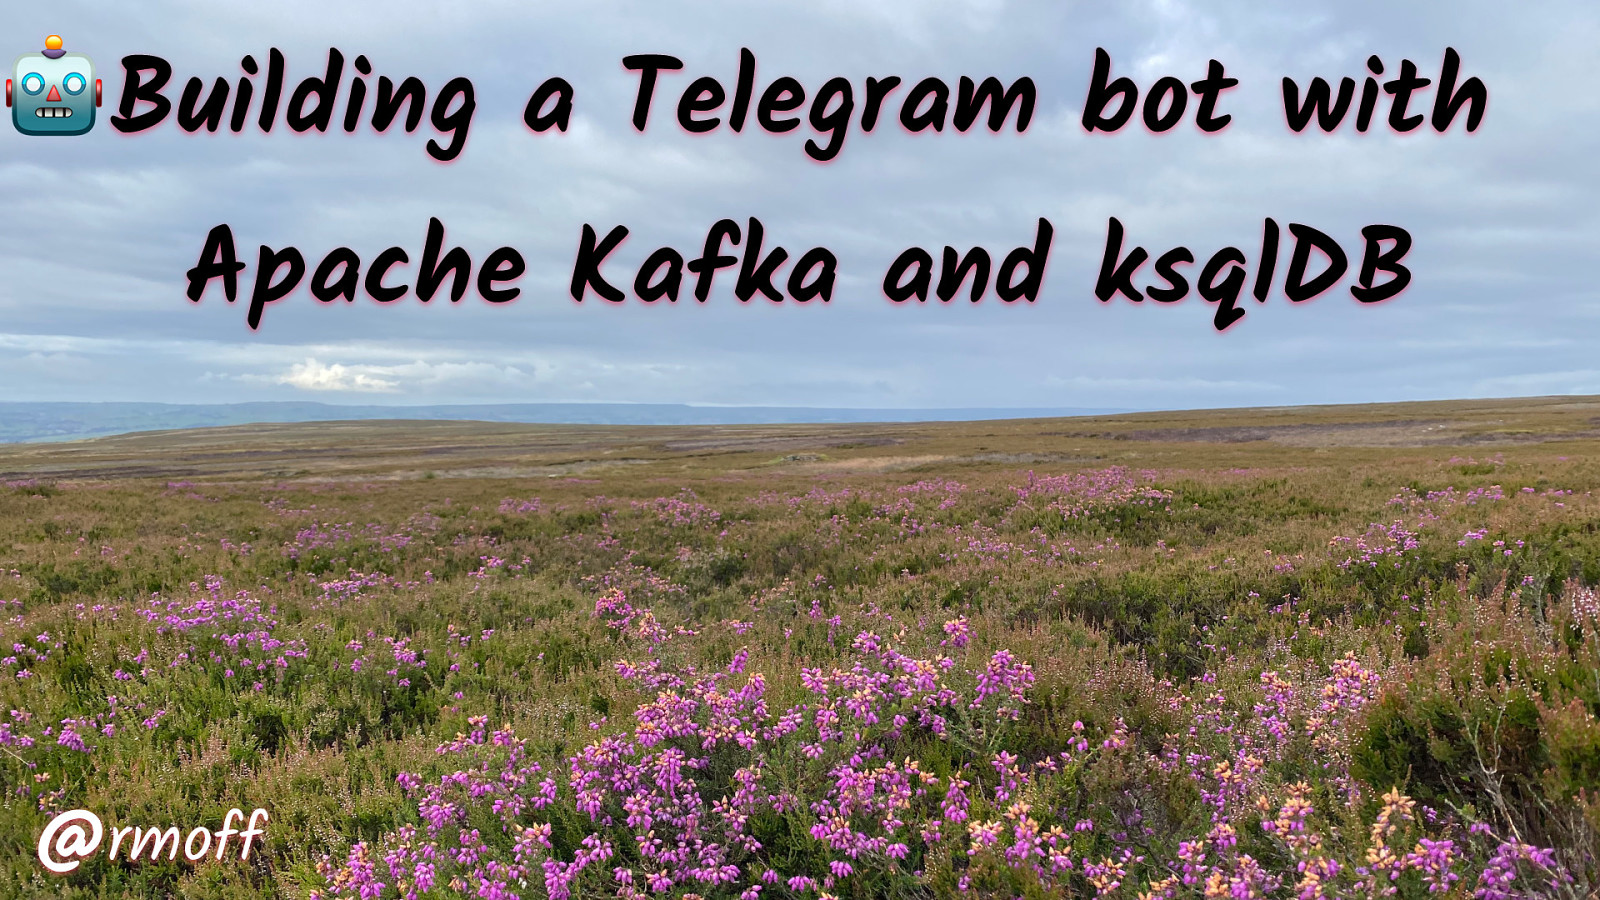 🤖Building a Telegram bot with Apache Kafka and ksqlDB